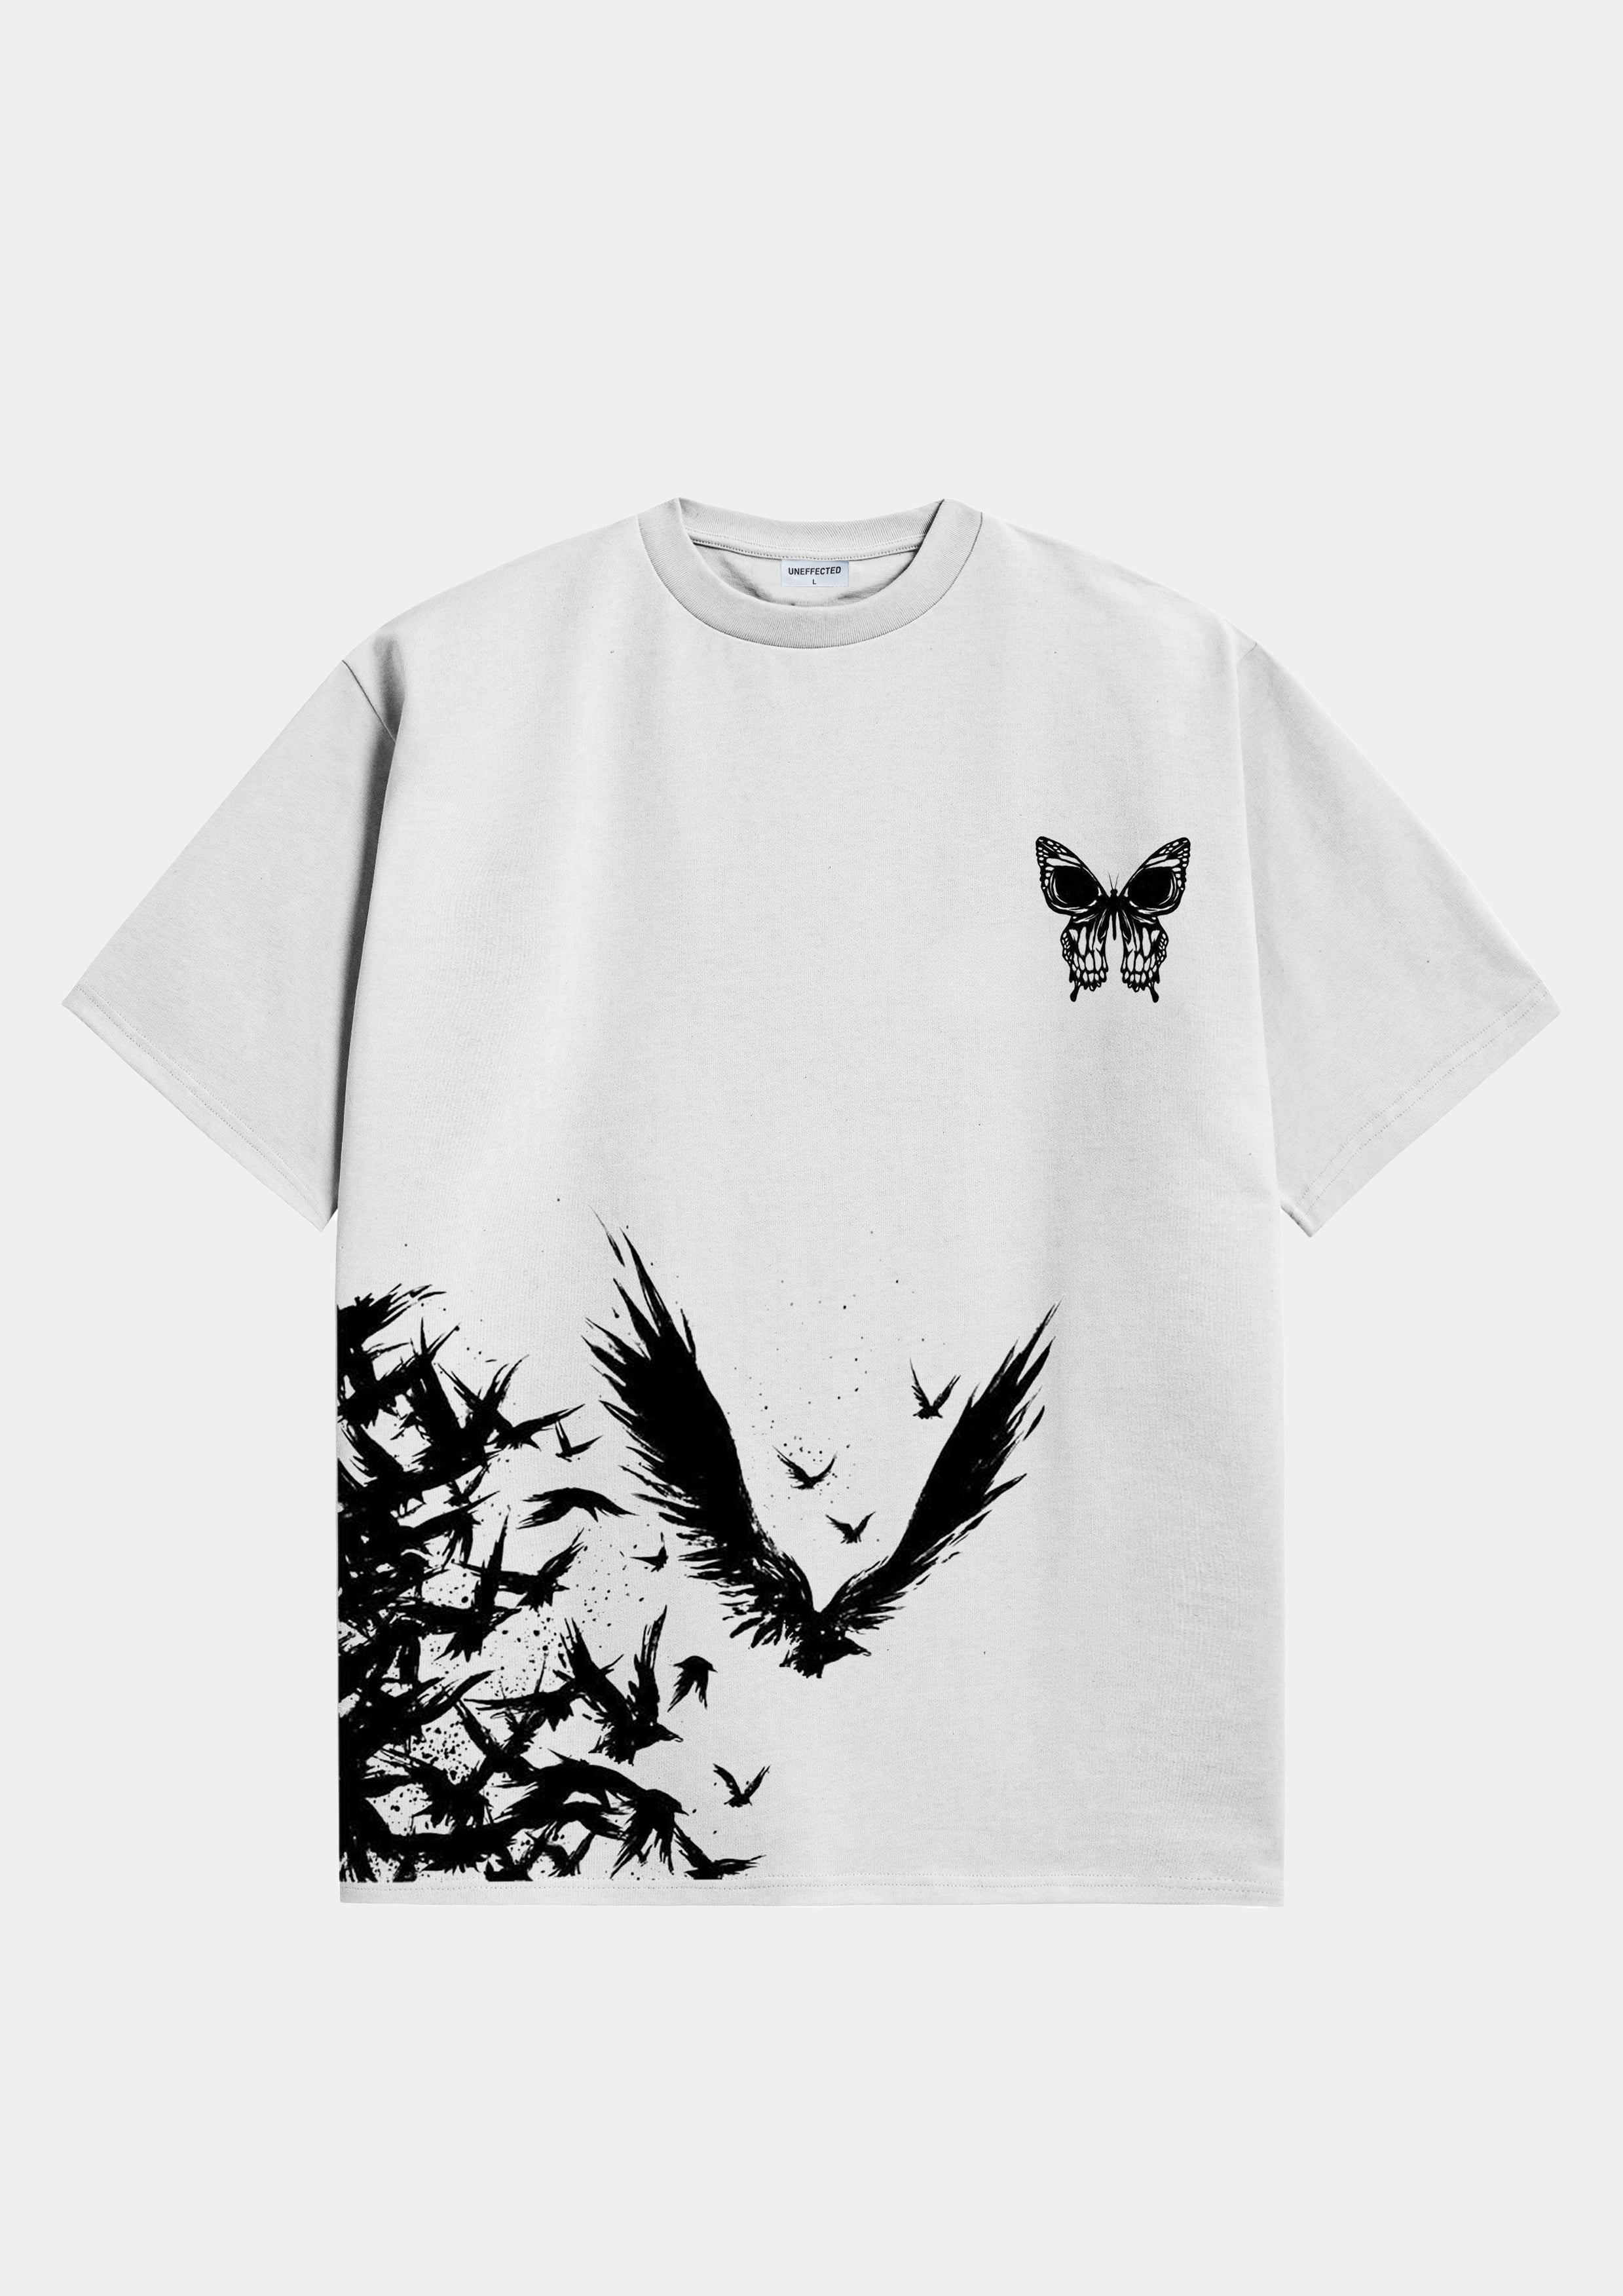 Butterfly Effect Relaxed Tee White - UNEFFECTED STUDIOS® - T - shirt - UNEFFECTED STUDIOS®